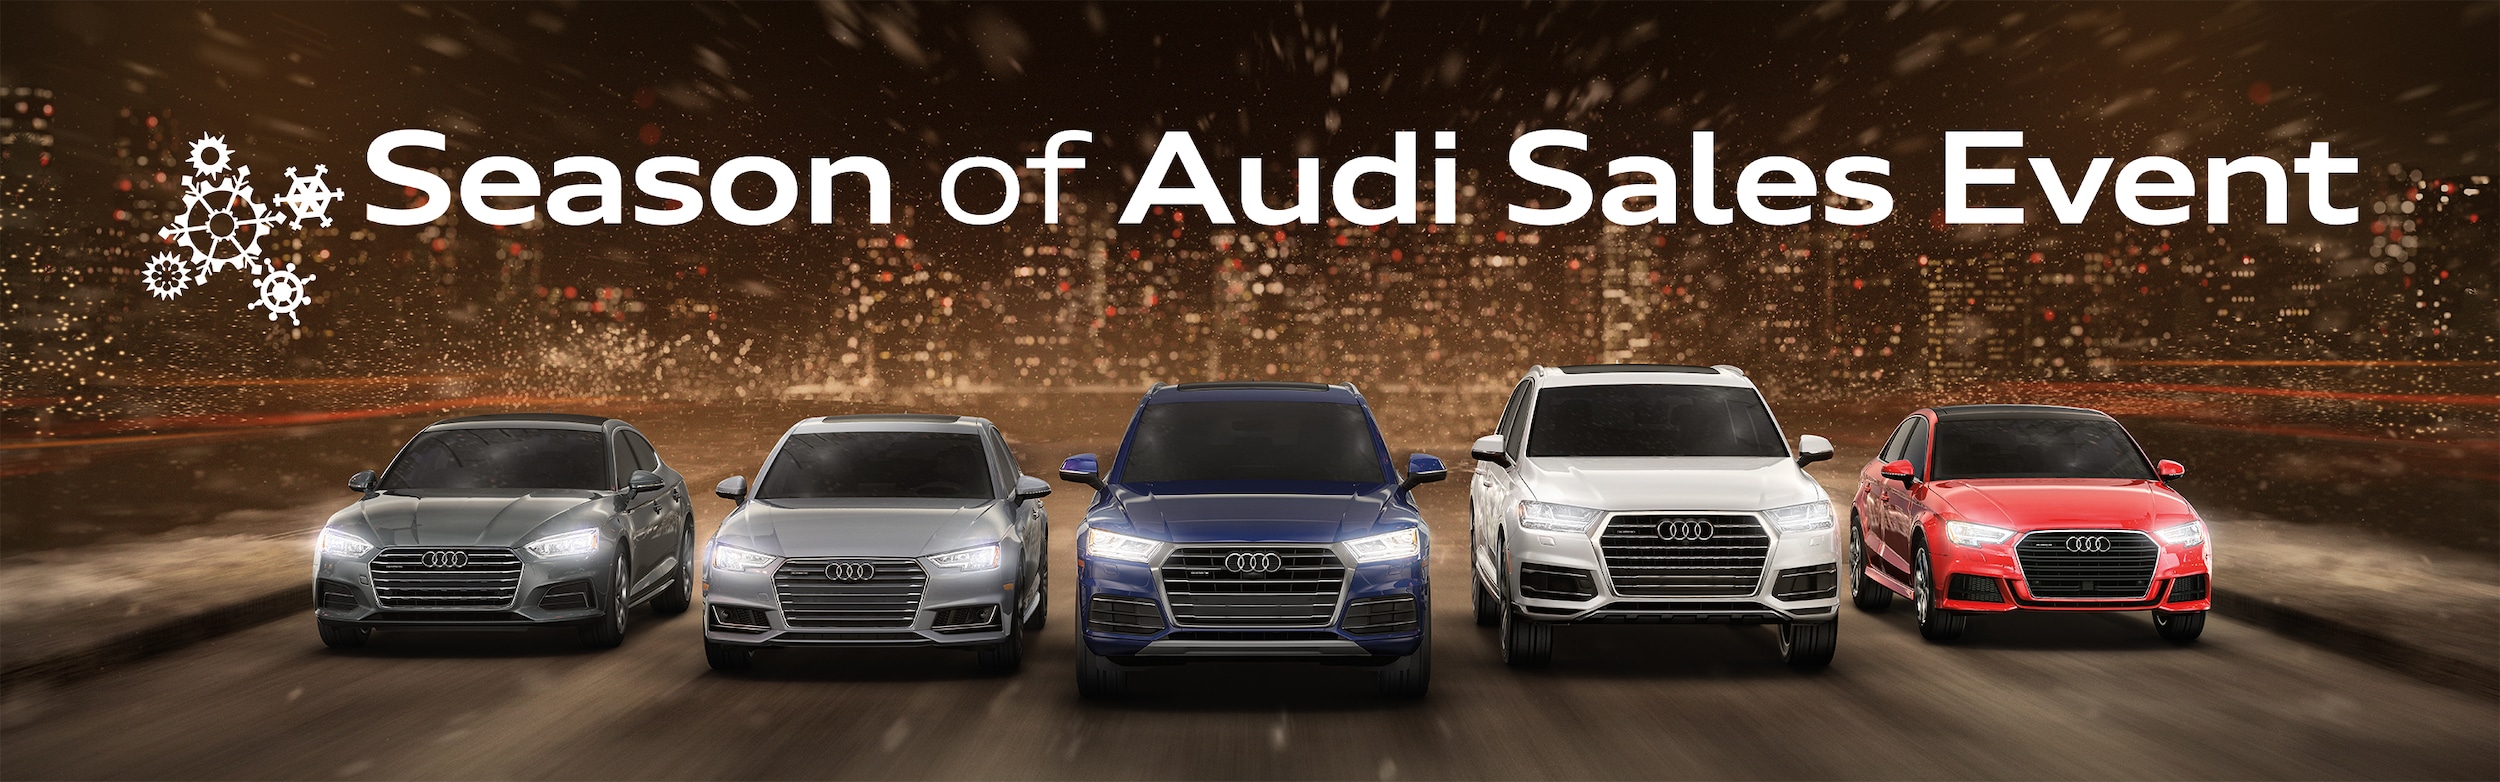 Season of Audi Sales Event Lease Offers Fremont CA Audi Fremont